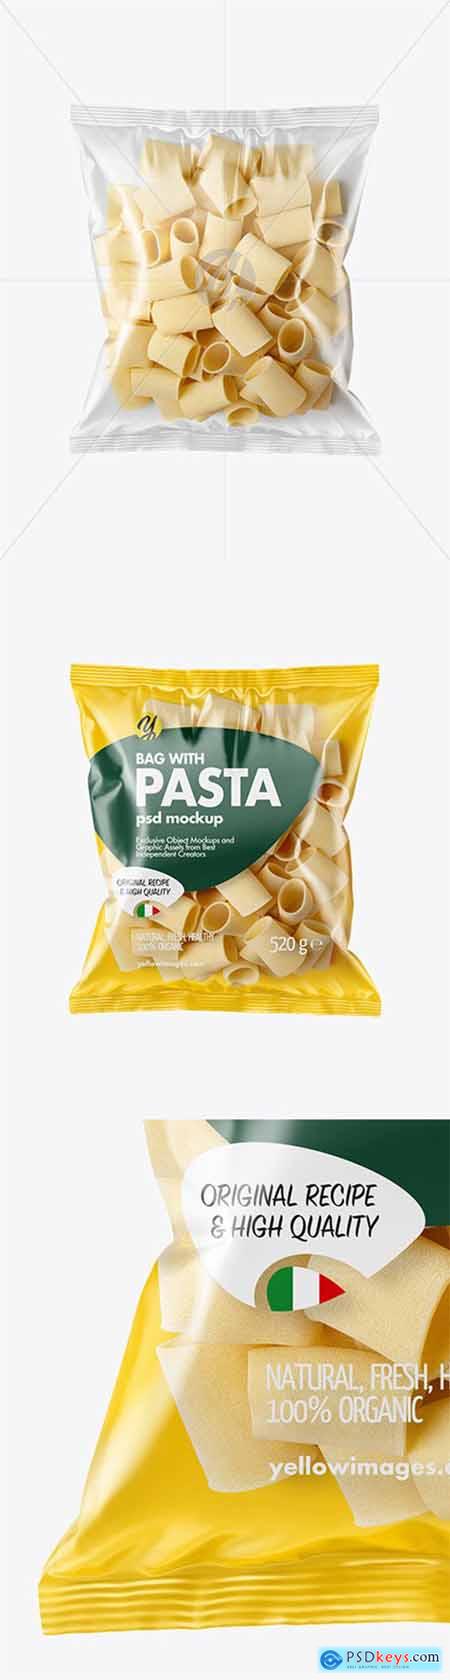 Plastic Bag With Paccheri Pasta Mockup 80259